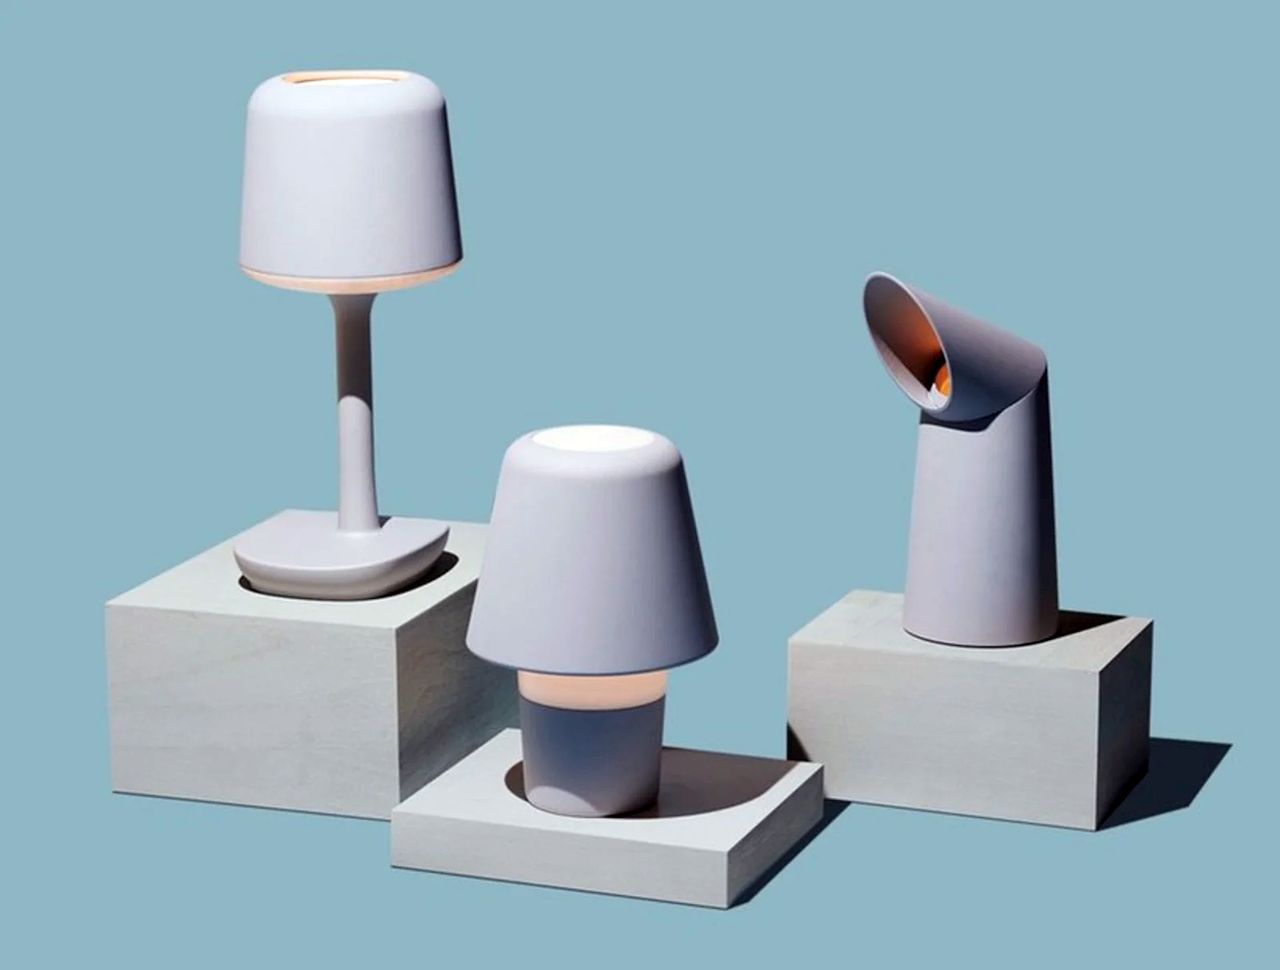  3D-printed lamps from Gantri. (Image courtesy of Gantri.) 